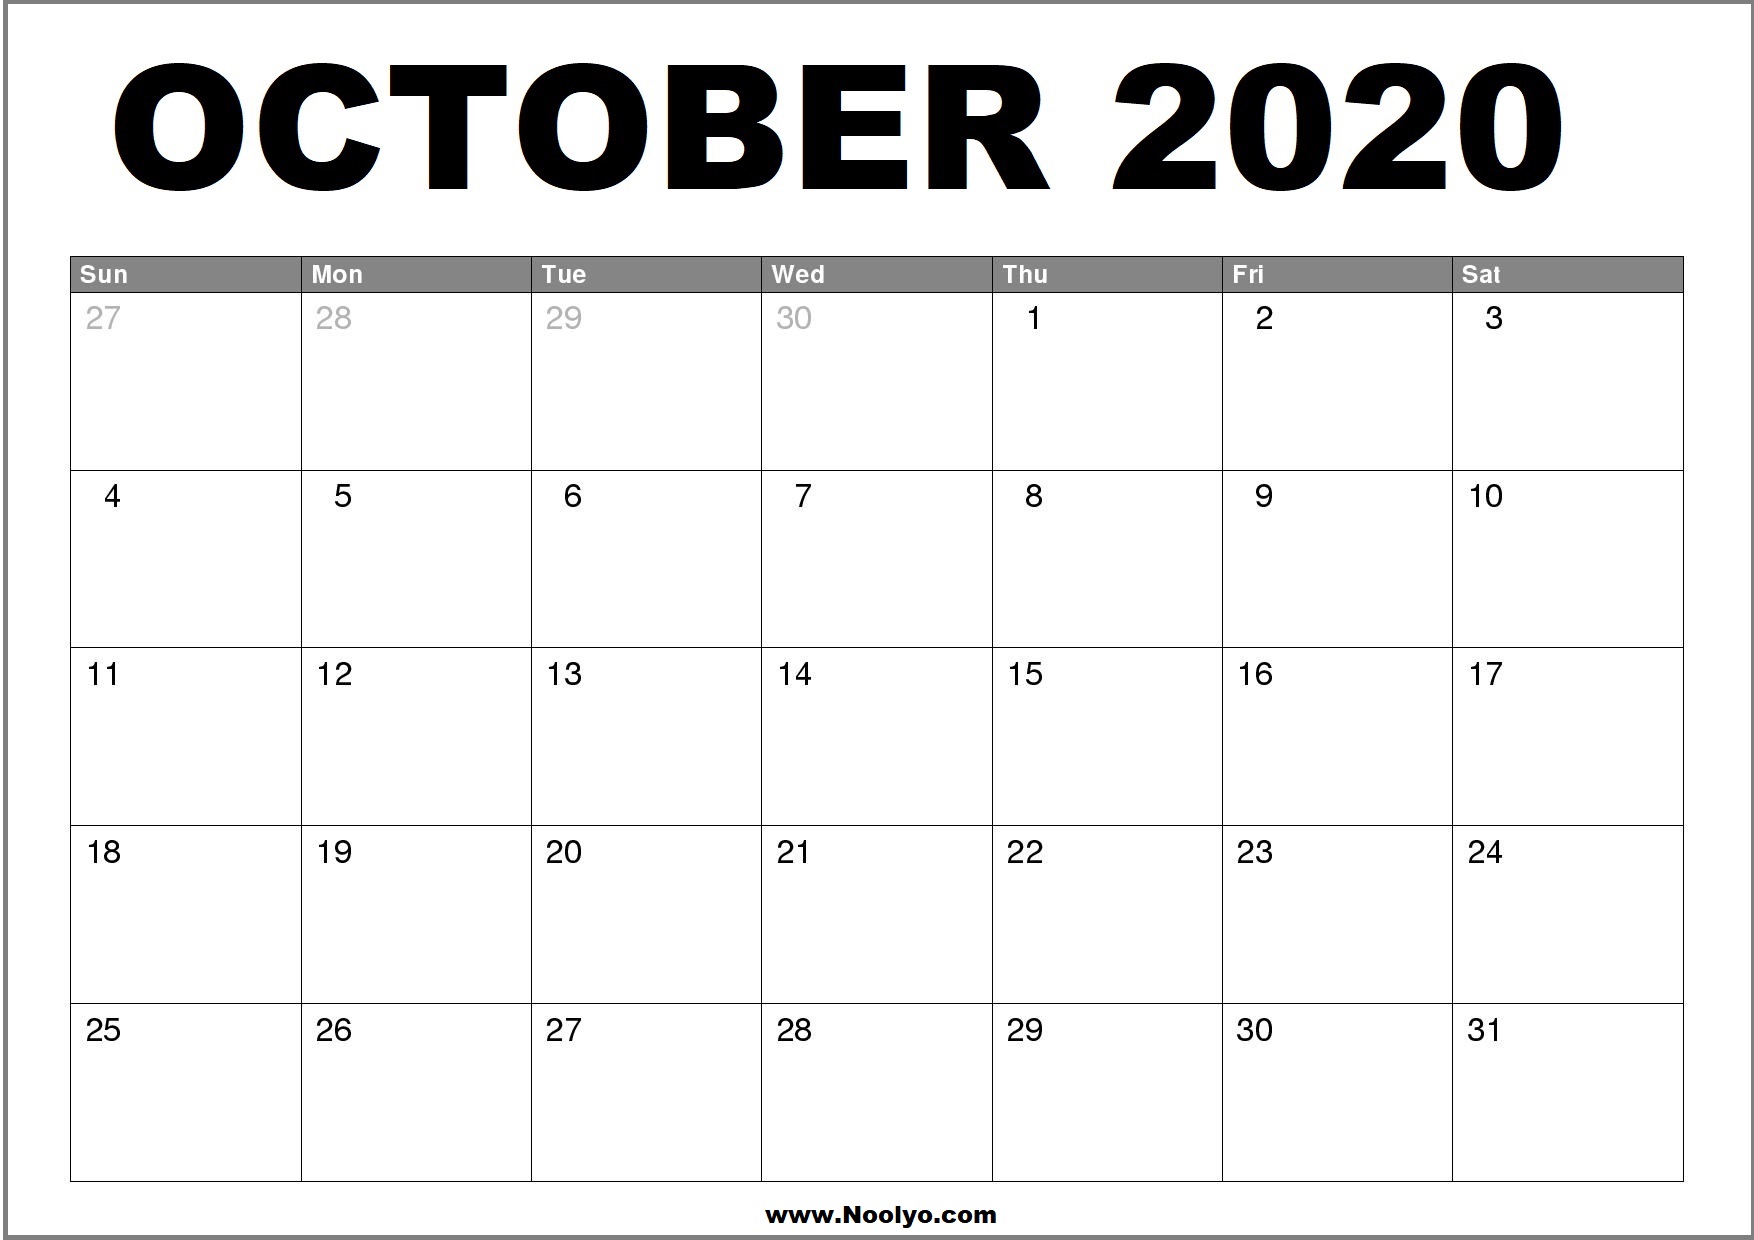 October 2020 Calendar Printable – Free Download